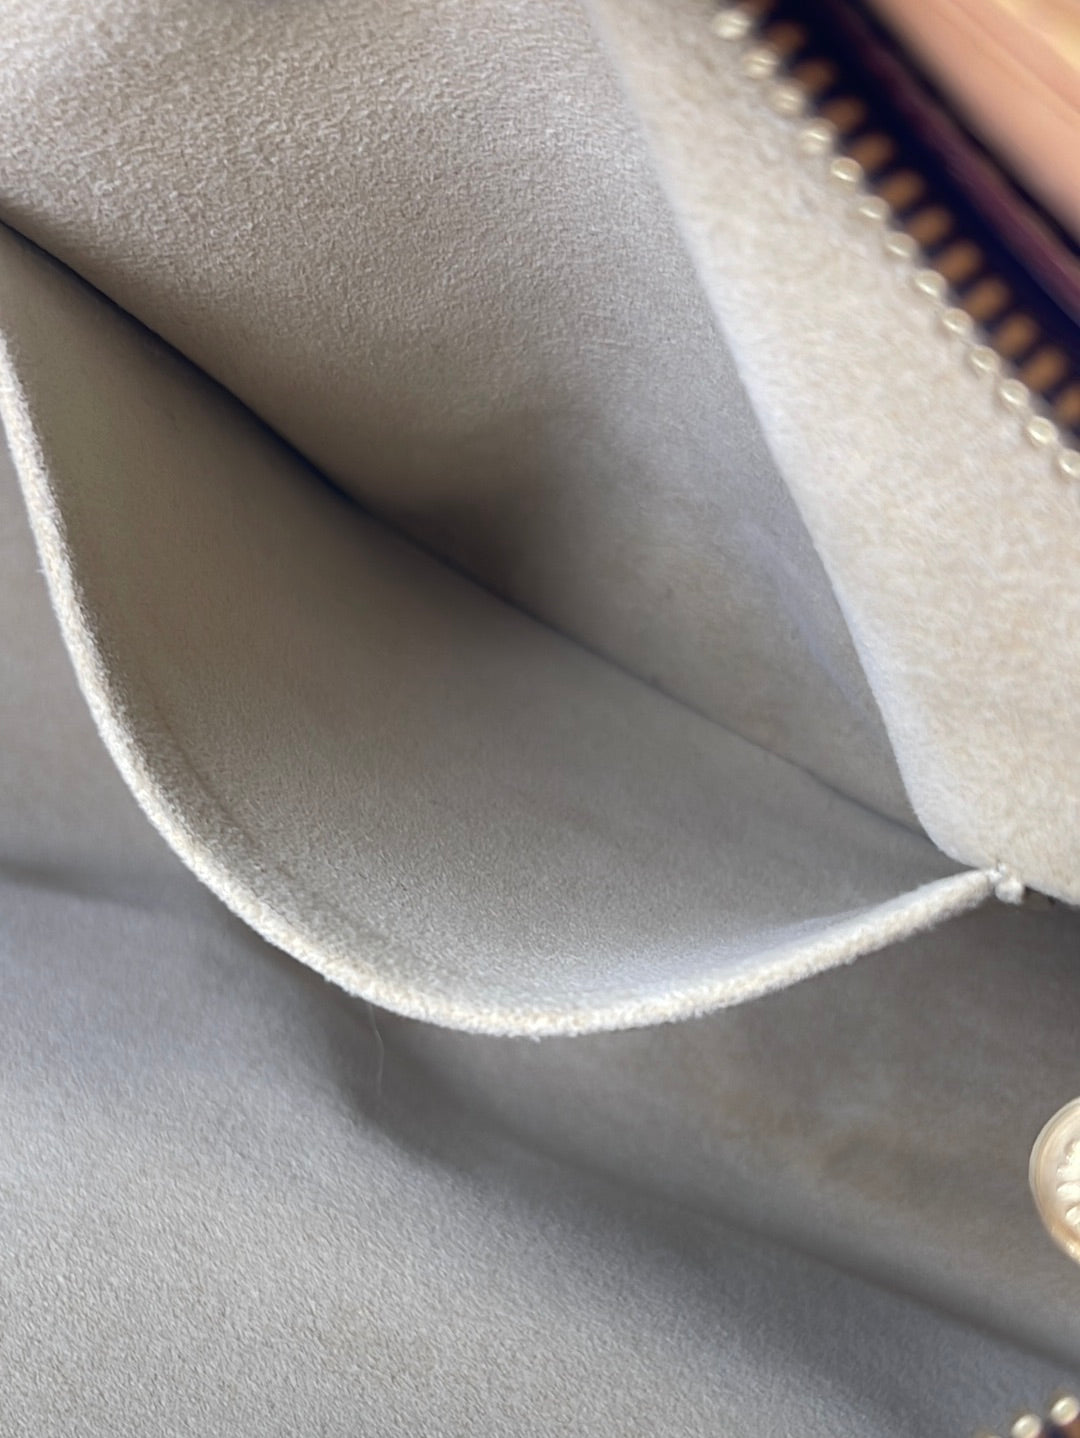 Preloved Louis Vuitton Boetie mm Monogram Canvas Shoulder Bag VI4170 092623